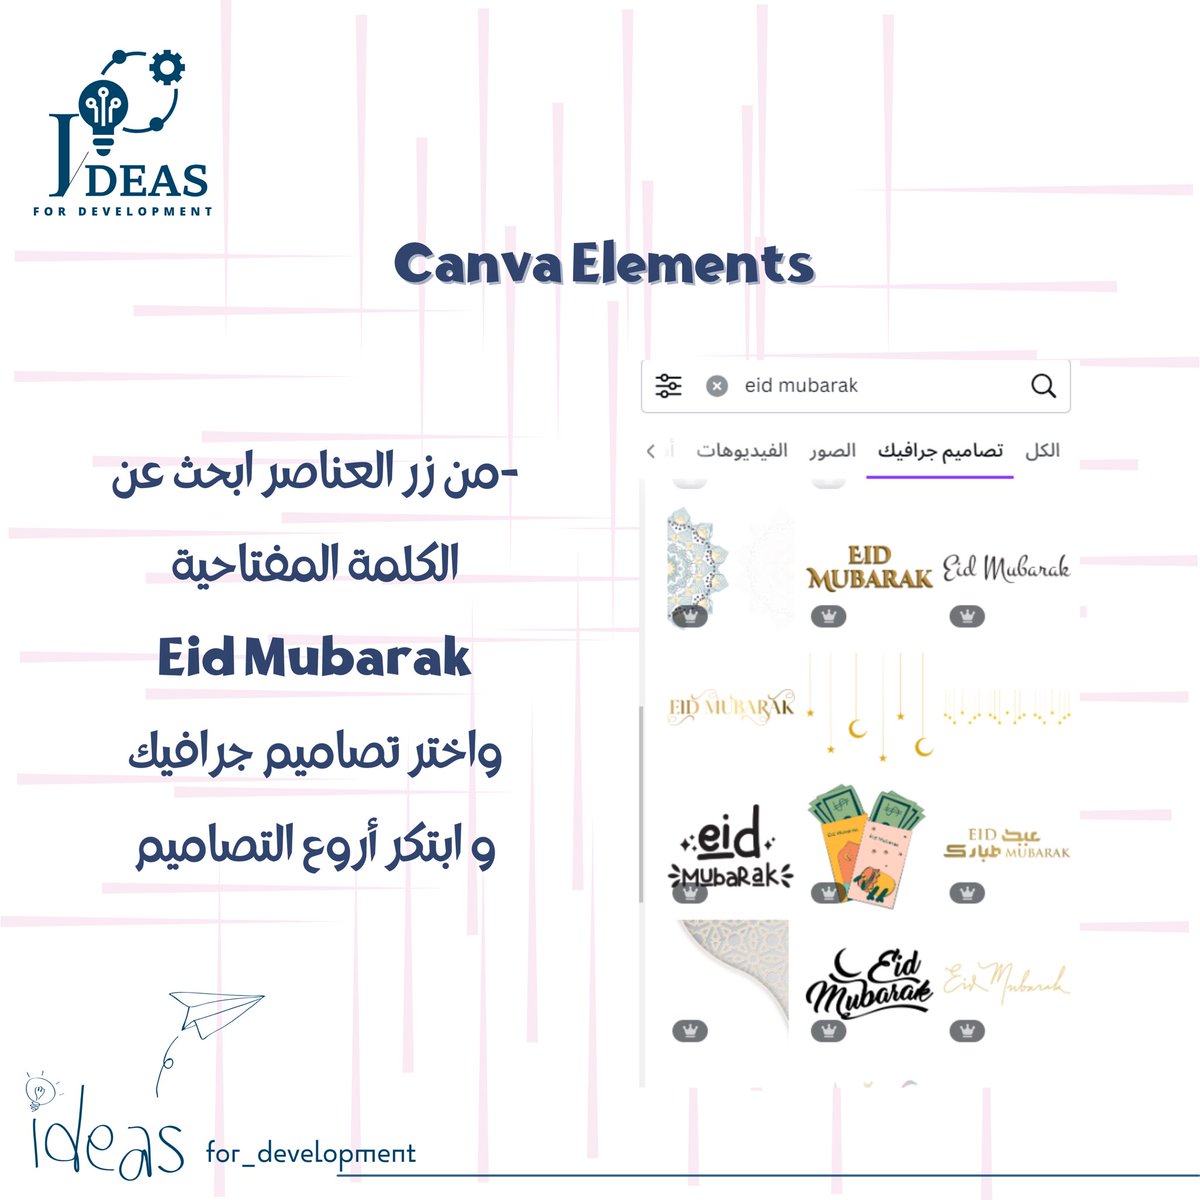 #design #designer #canvapro #canvatips #canvatemplate #canvaelements #infographic #canvadesigner